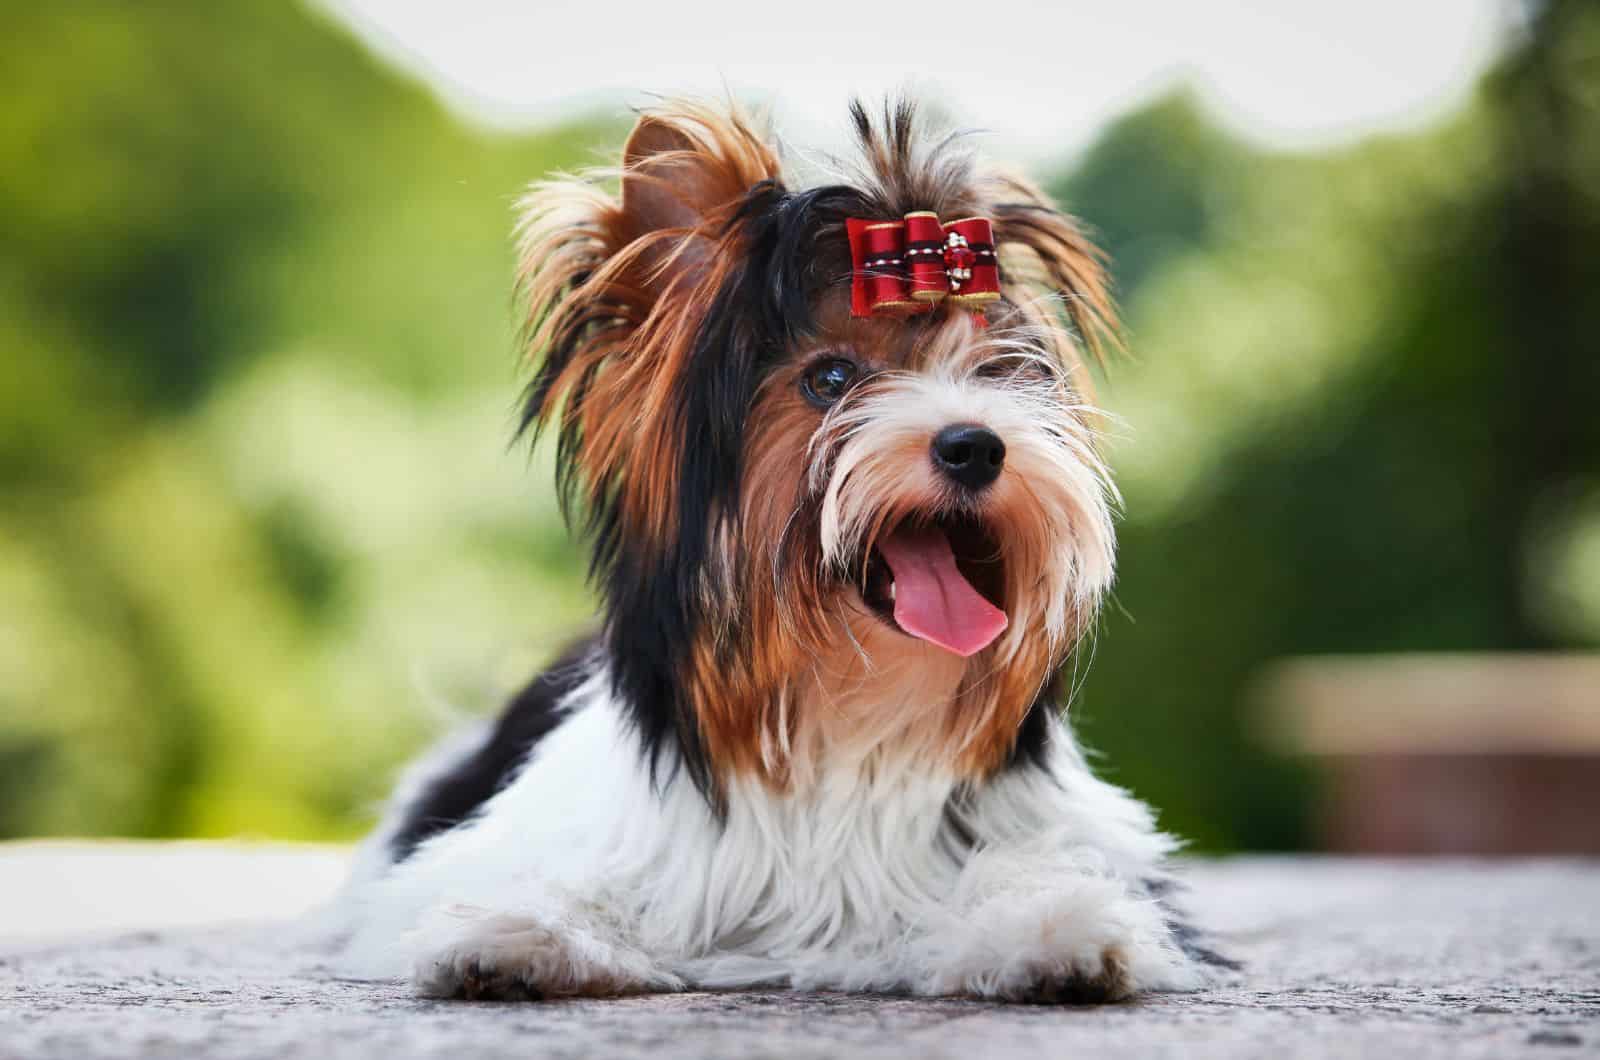 Biewer Terrier Haircuts: Top 4 Fashionable Hairstyles